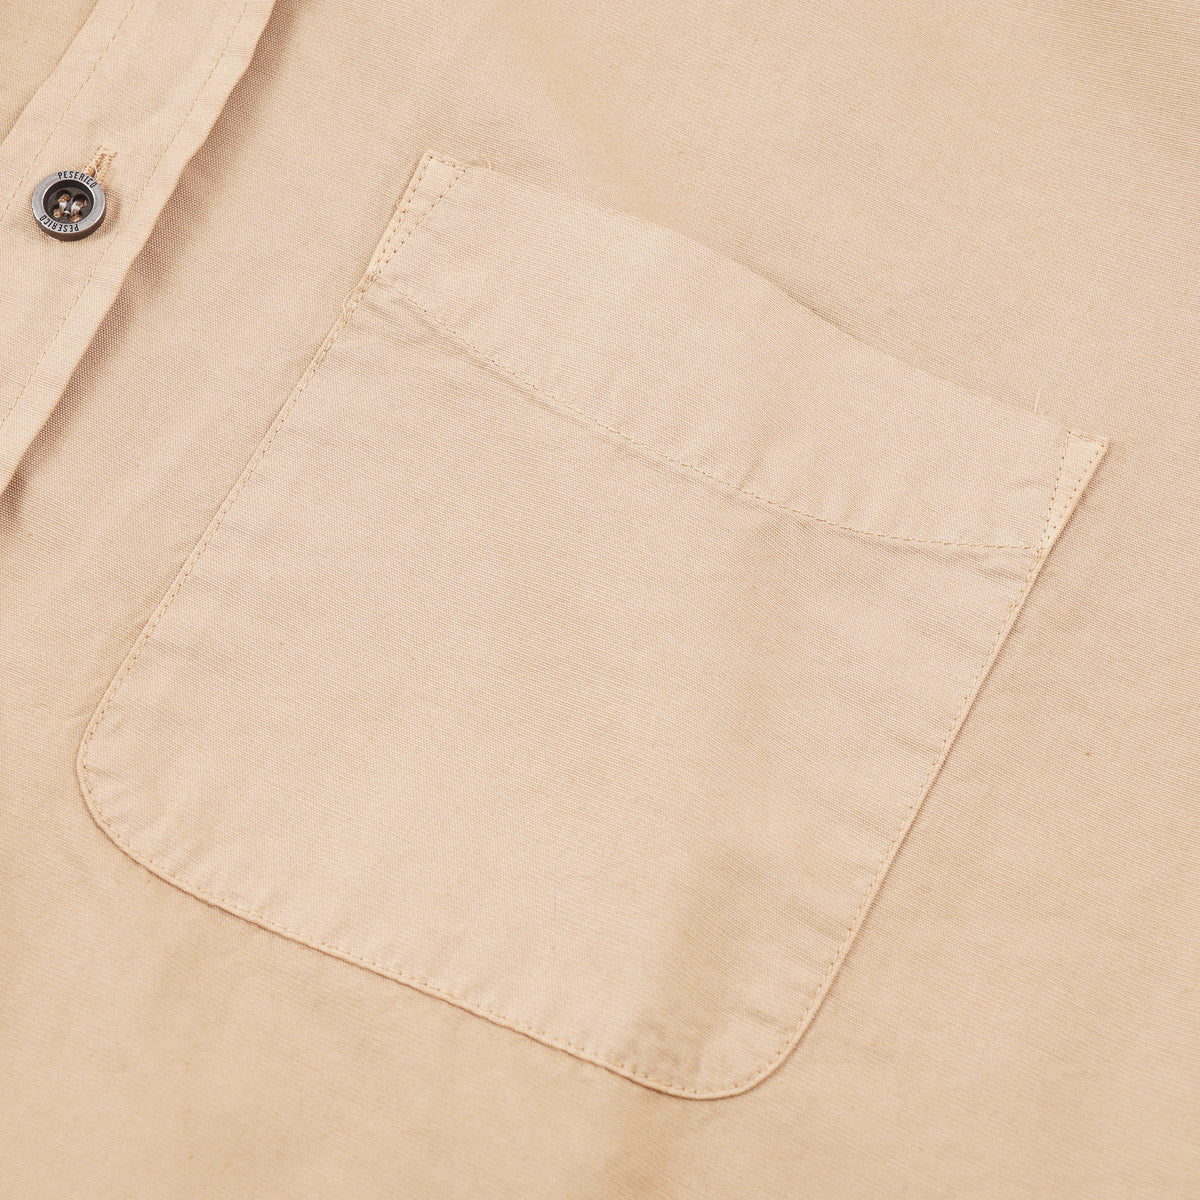 Peserico Tan Washed Cotton Shirt - Top Shelf Apparel